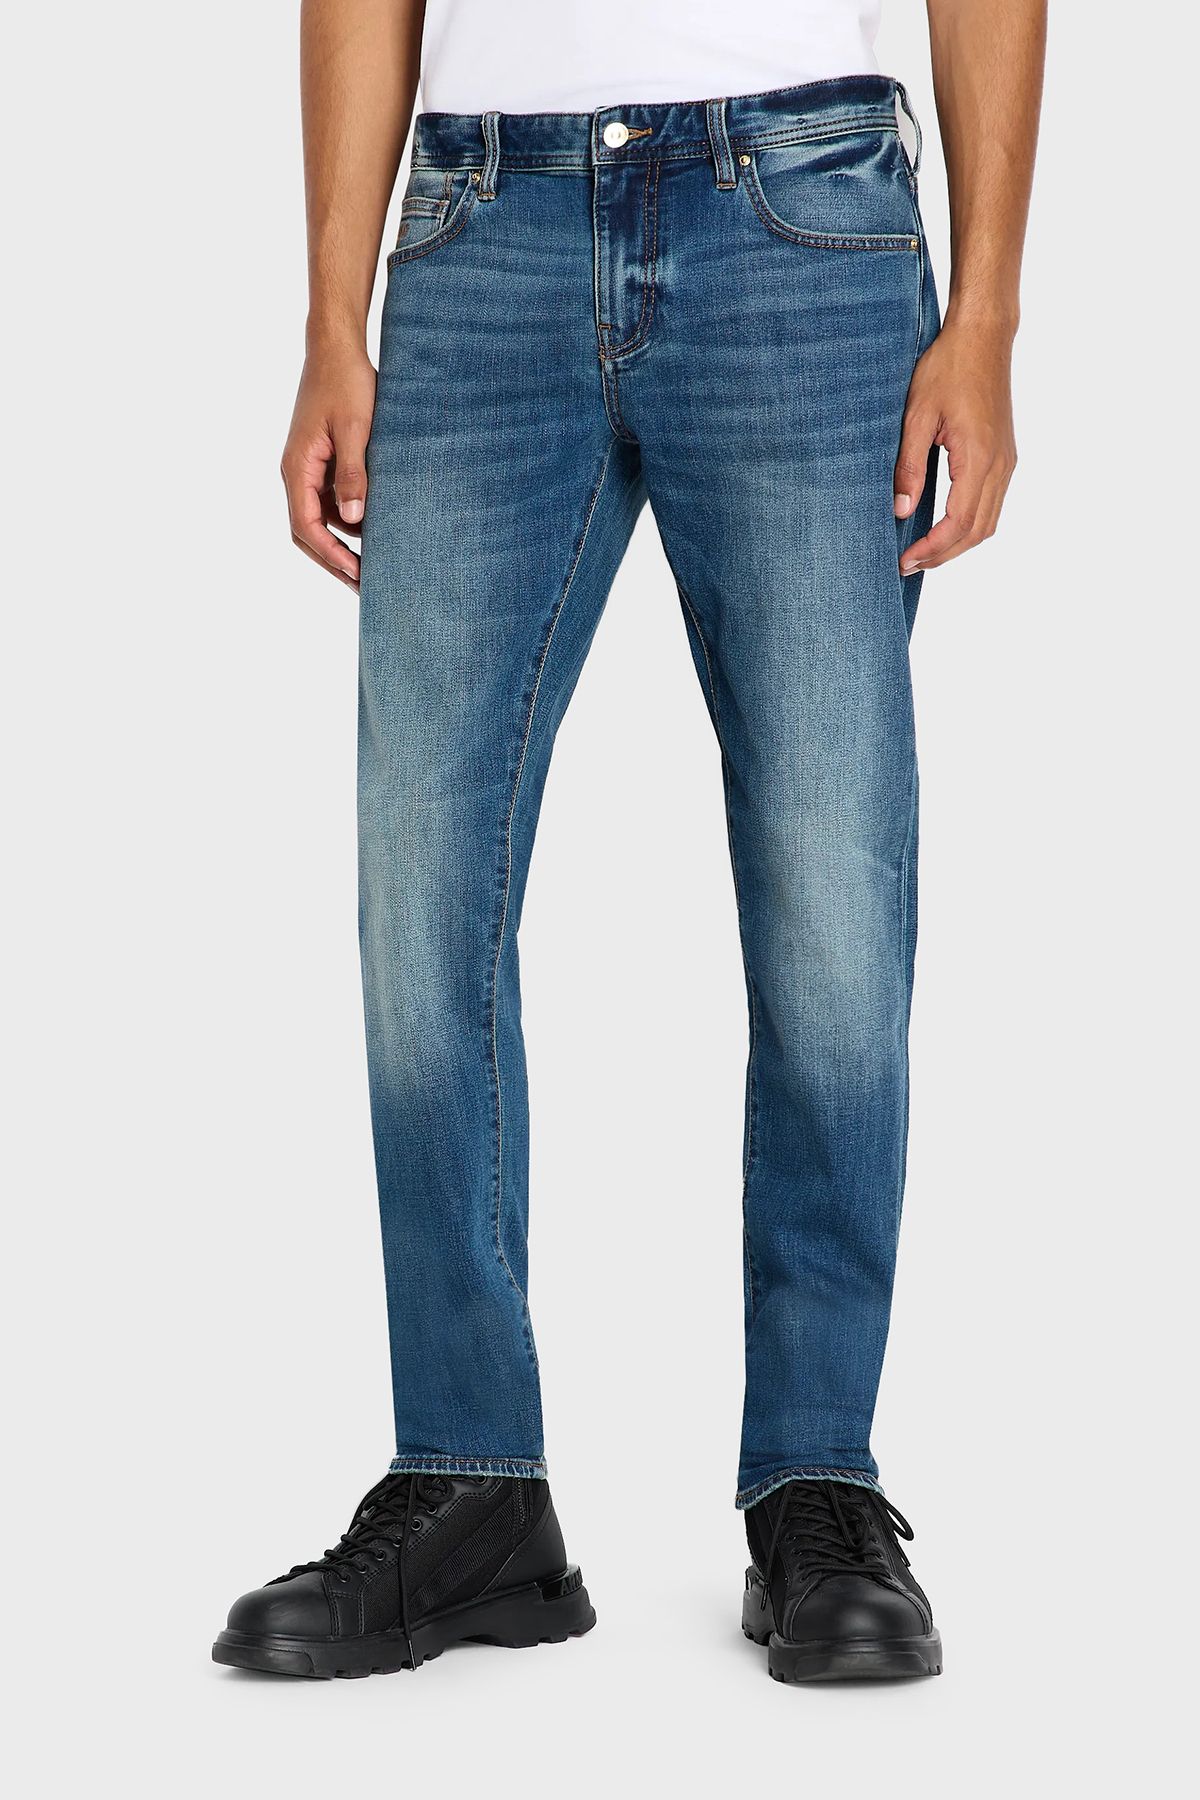 Armani Exchange J14 Düşük Bel Dar Paça Slim Fit Jeans Erkek KOT PANTOLON 6RZJ14 Z18WZ 1500